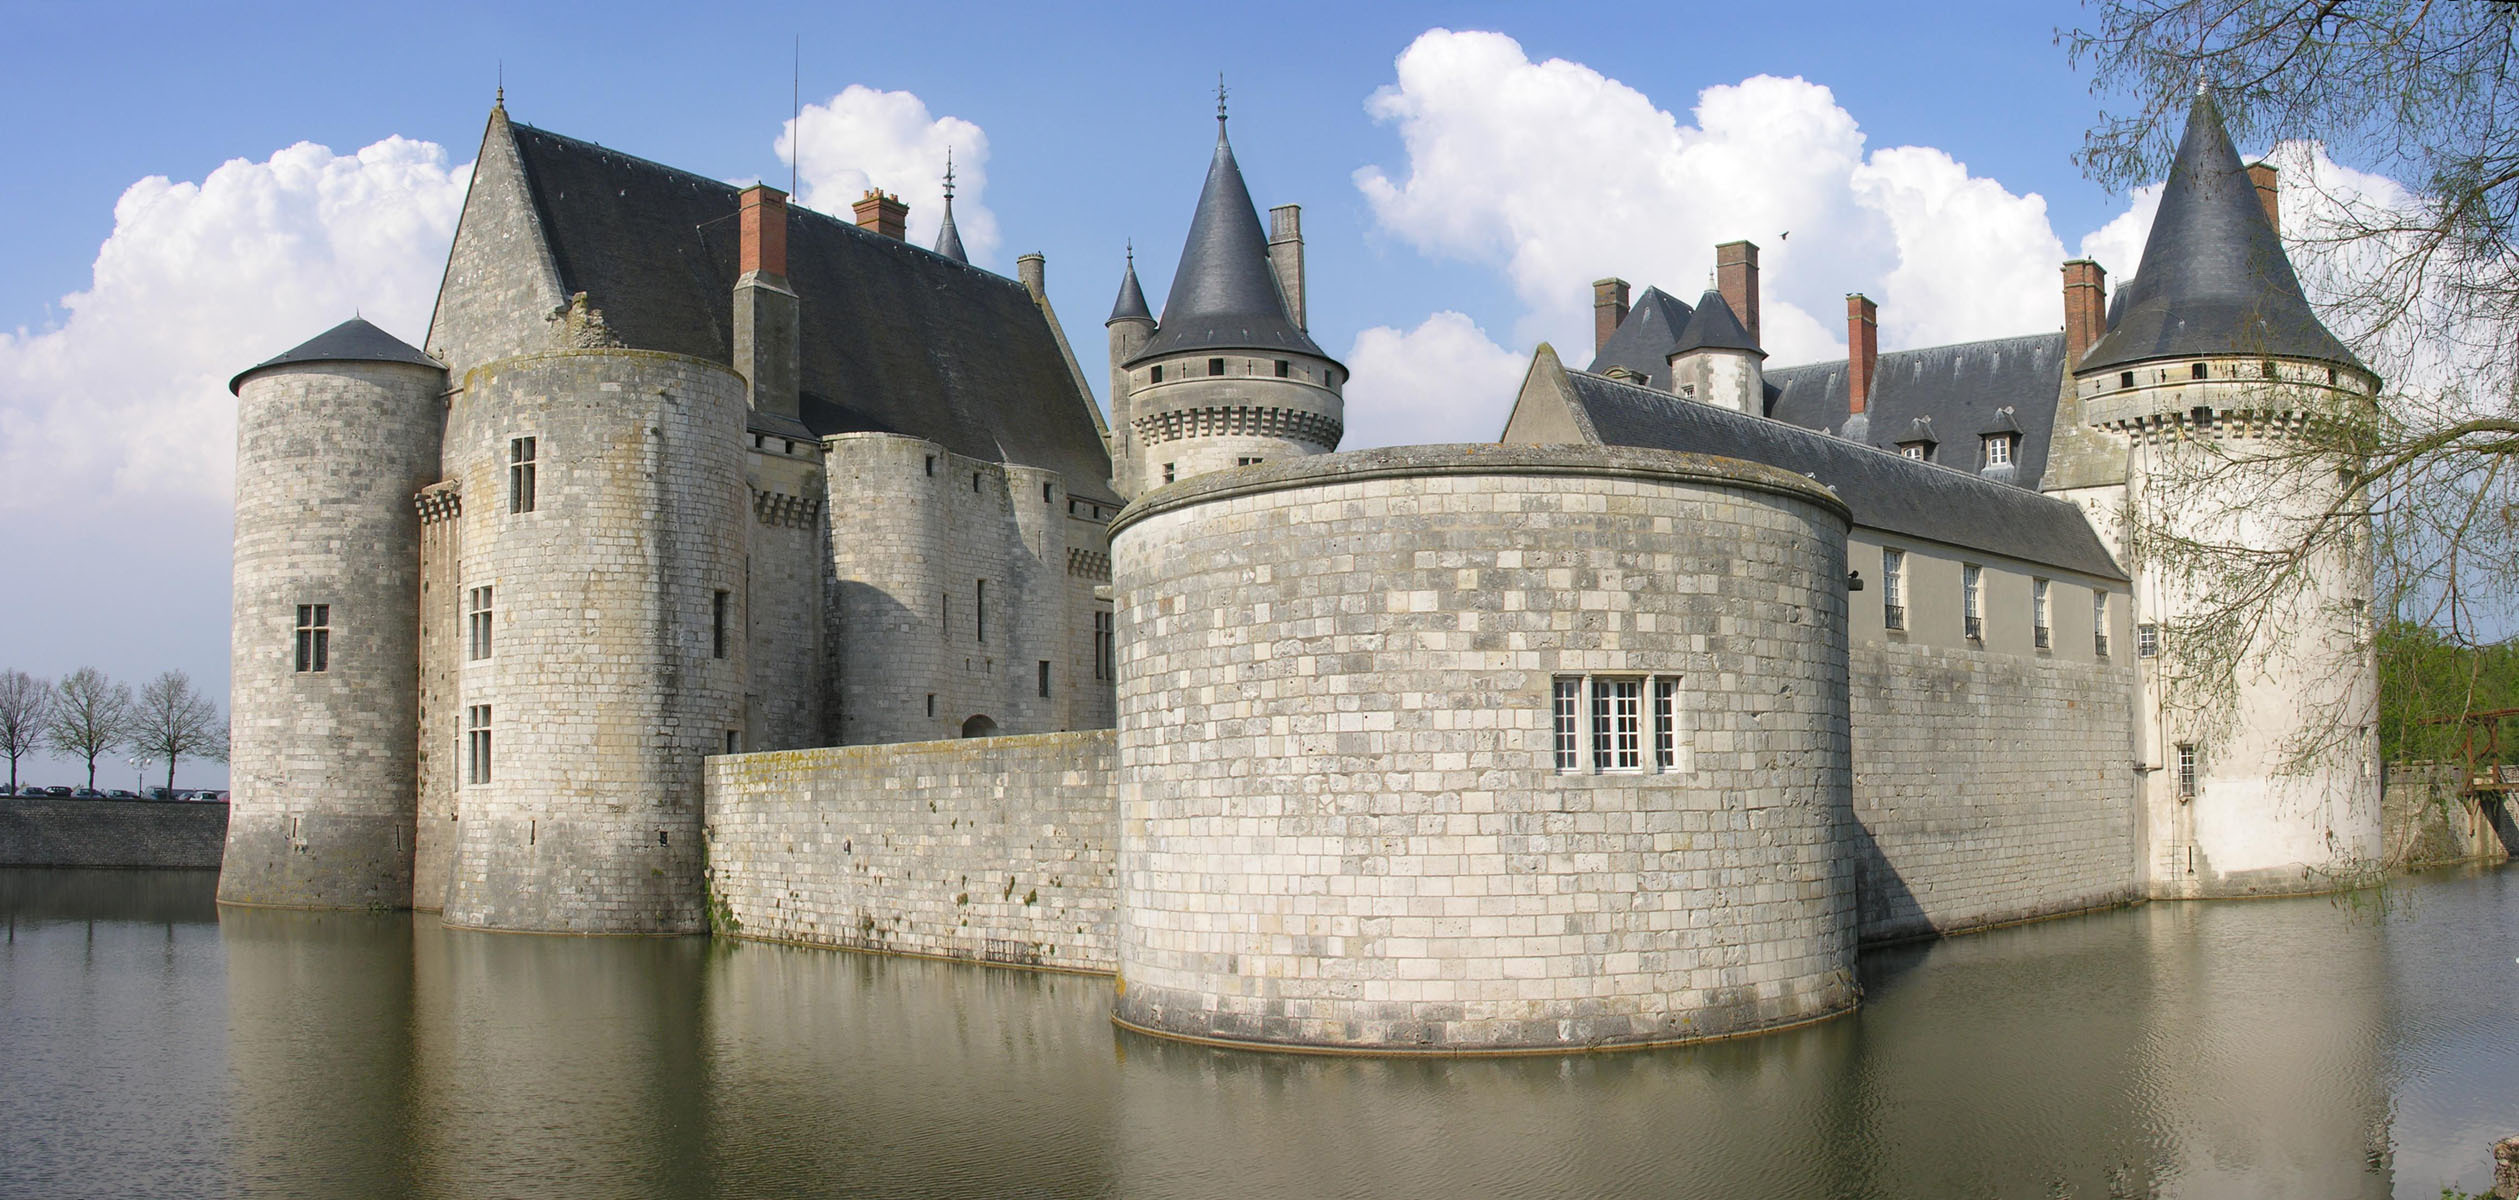 Castle of Sully sur Loire - France3.jpg